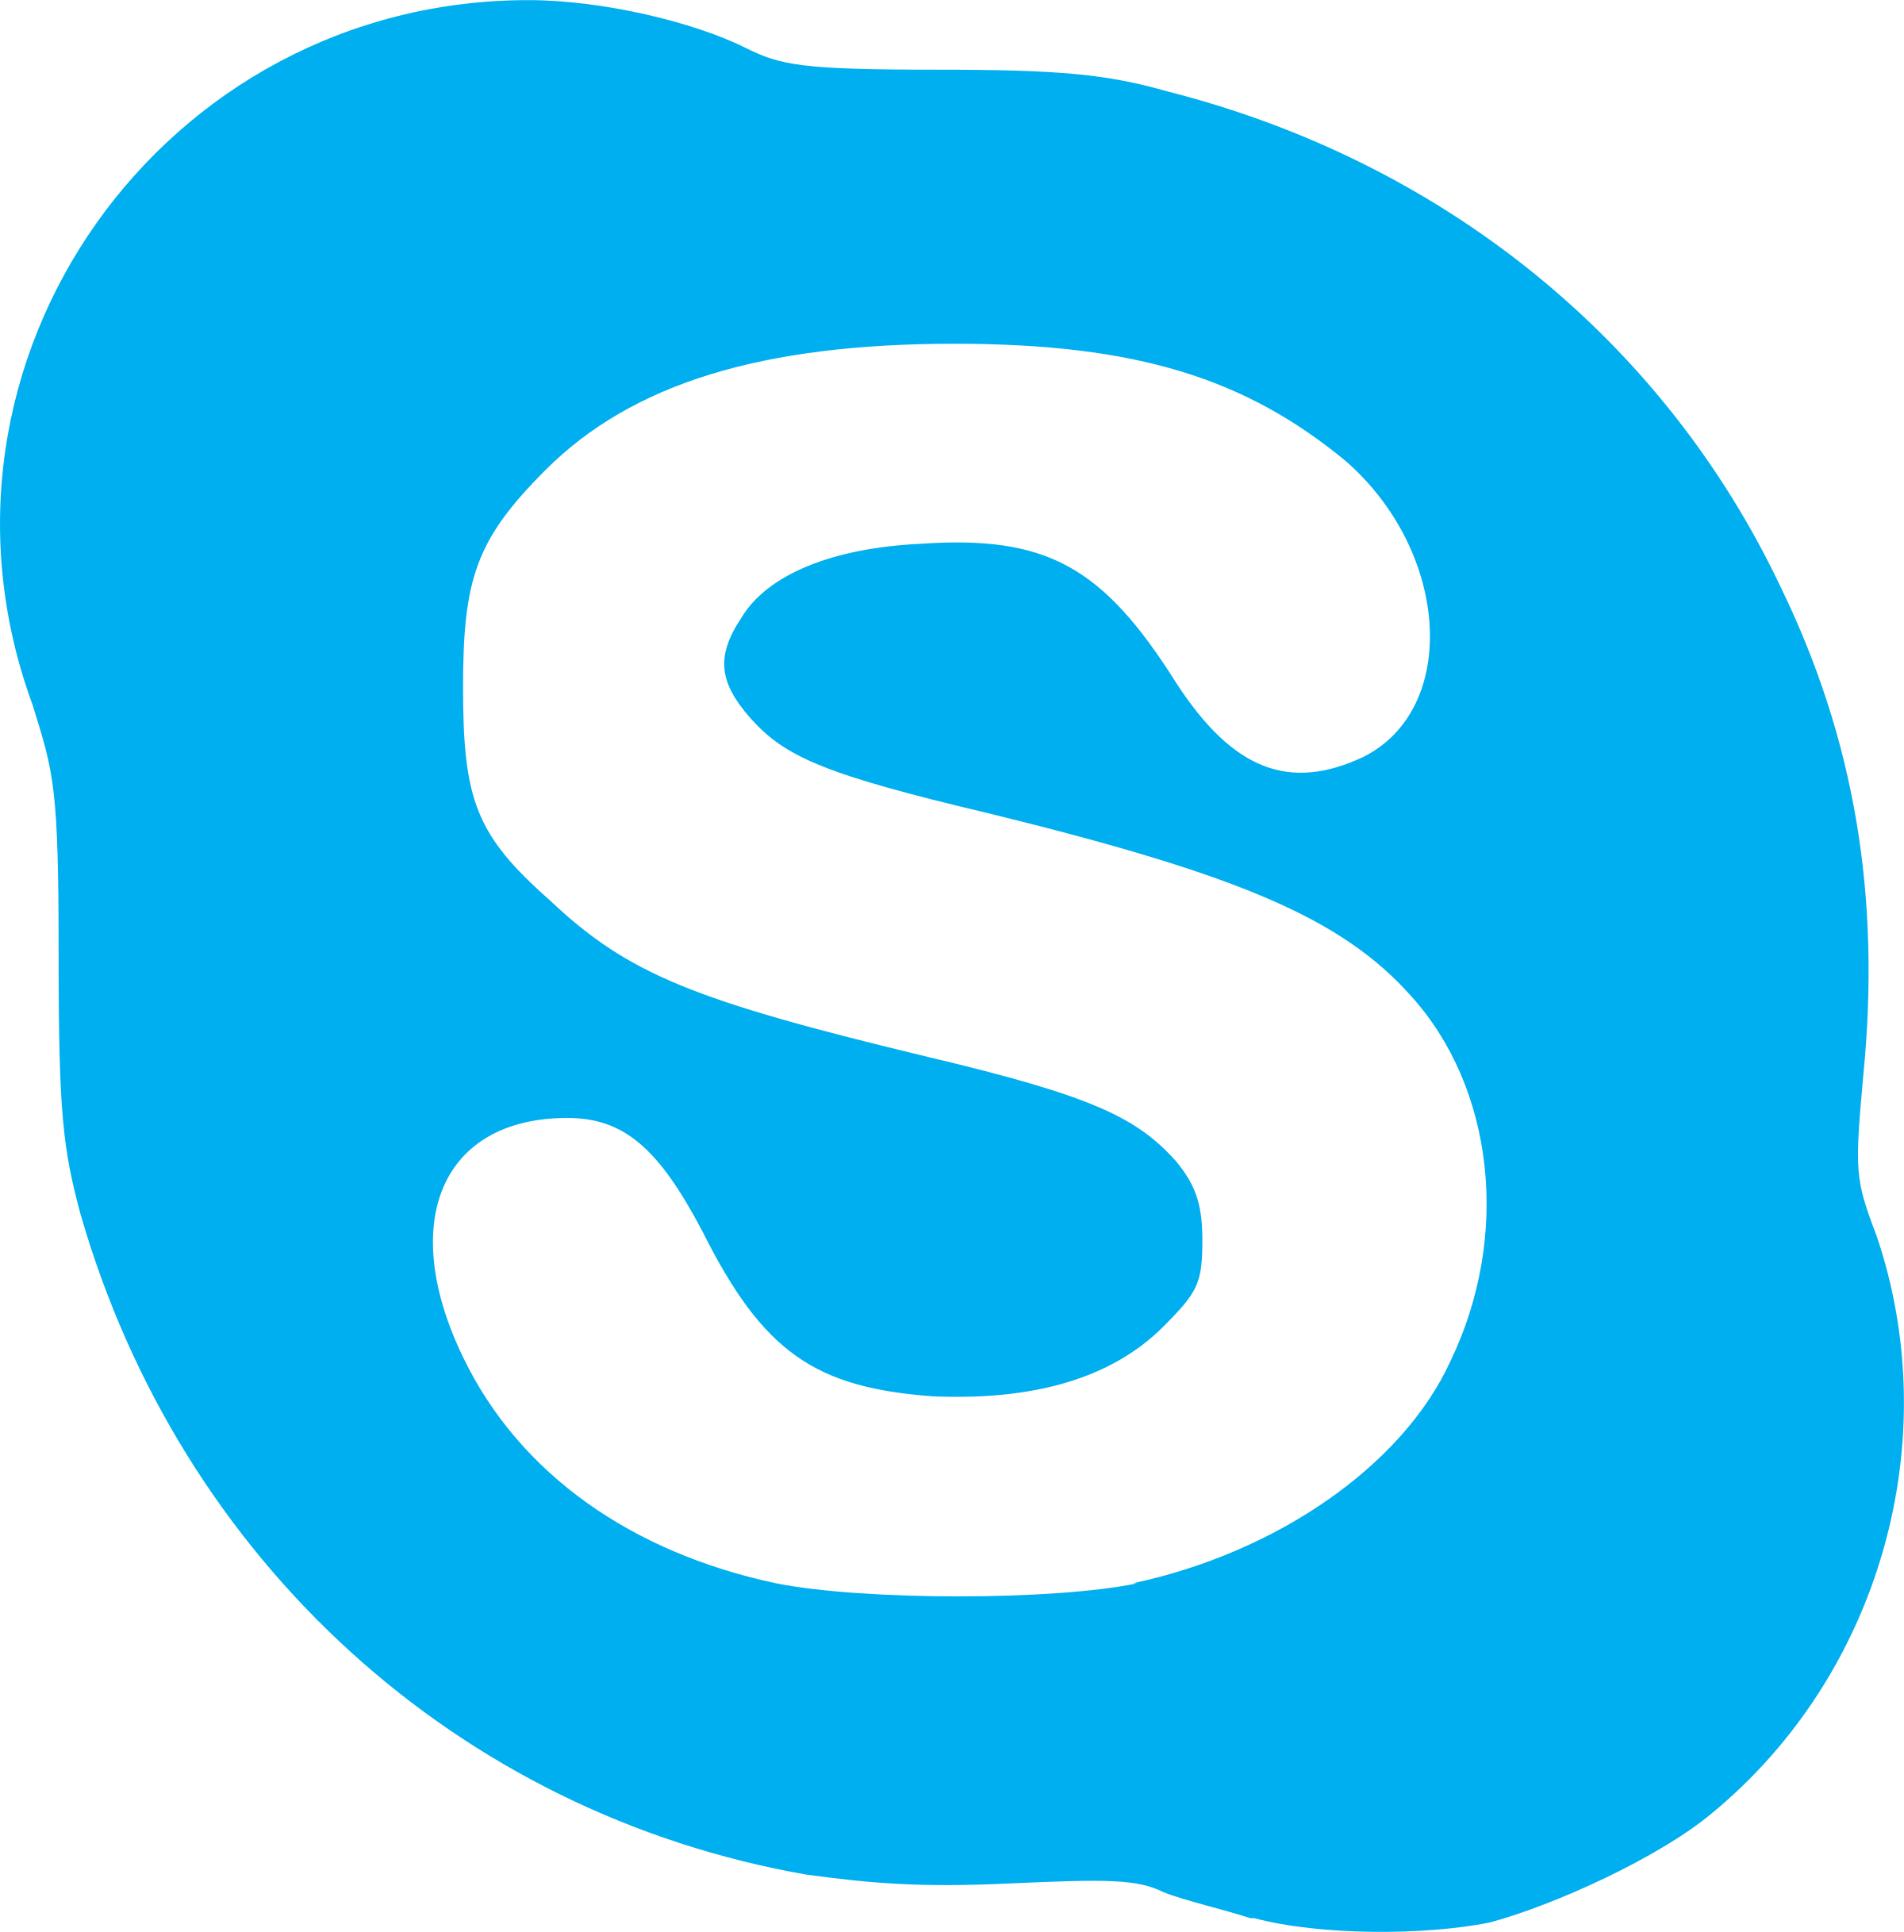 shuterstock skype logo